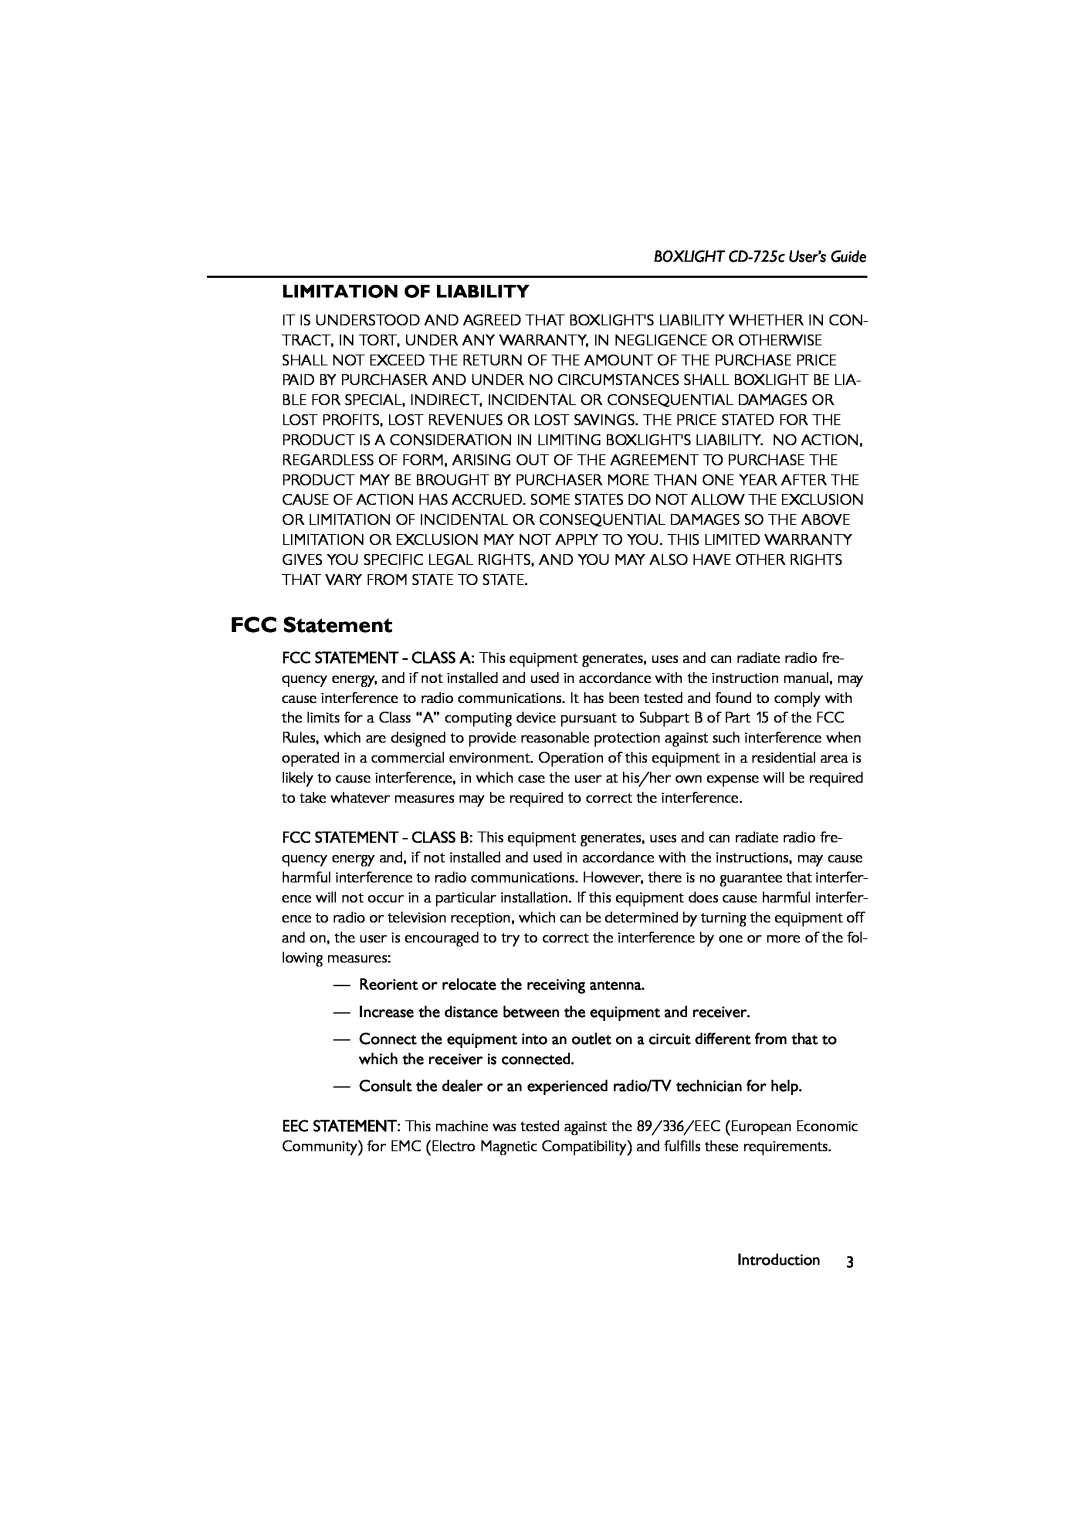 BOXLIGHT manual FCC Statement, Limitation Of Liability, BOXLIGHT CD-725c User’s Guide 